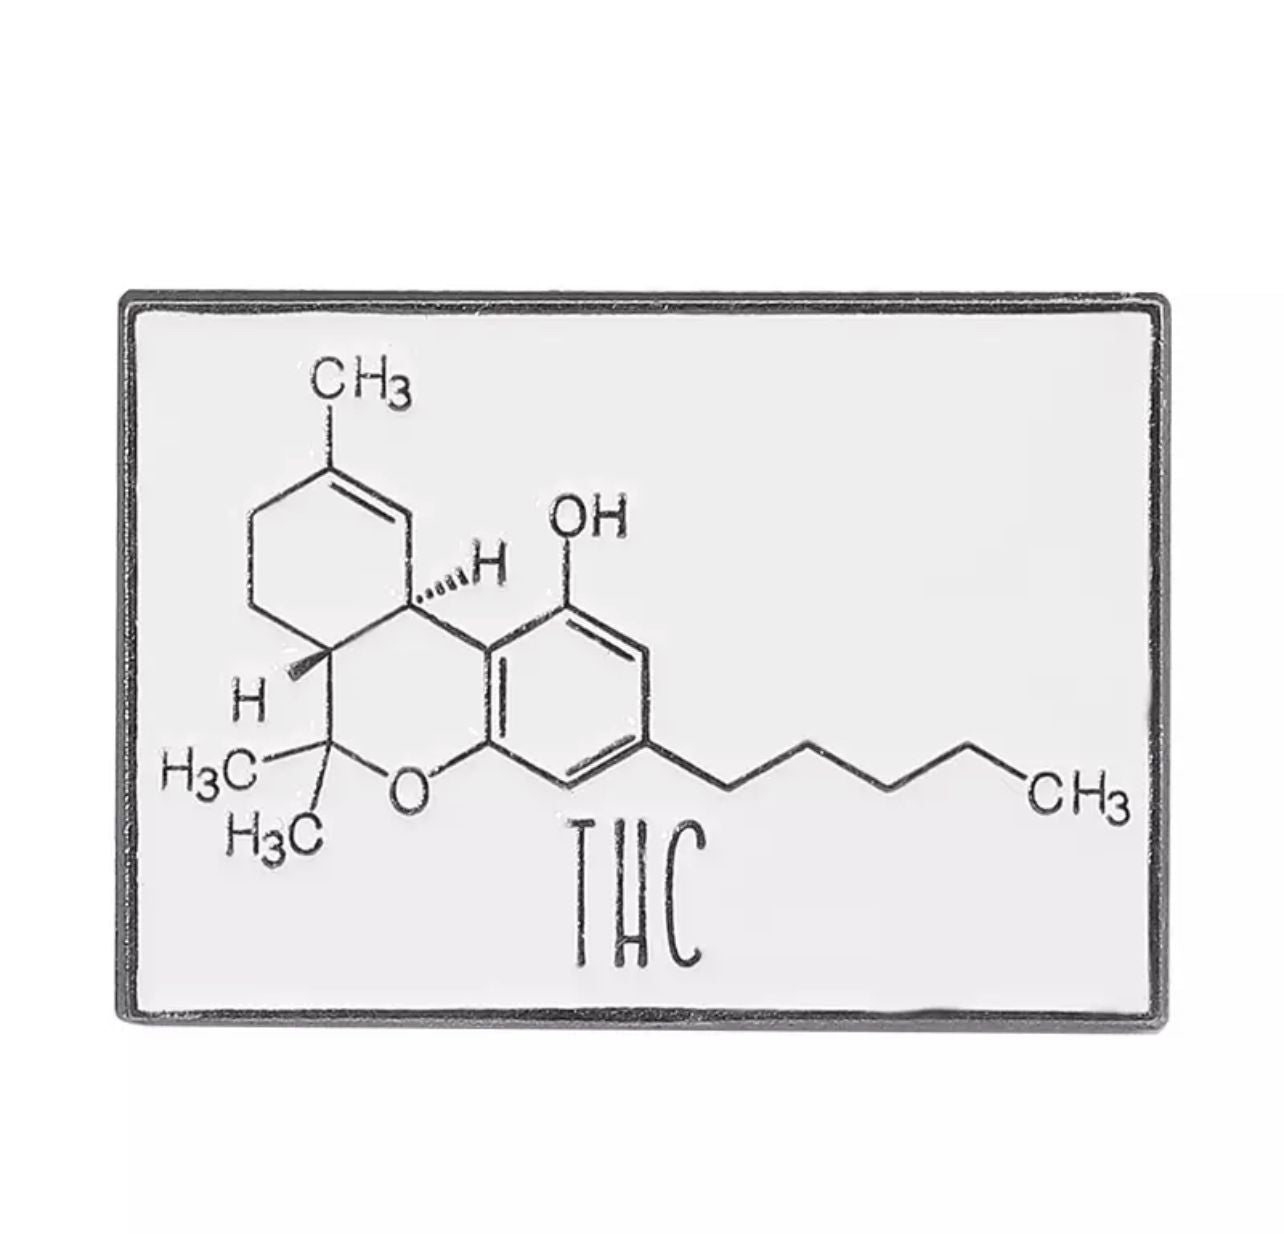 THC